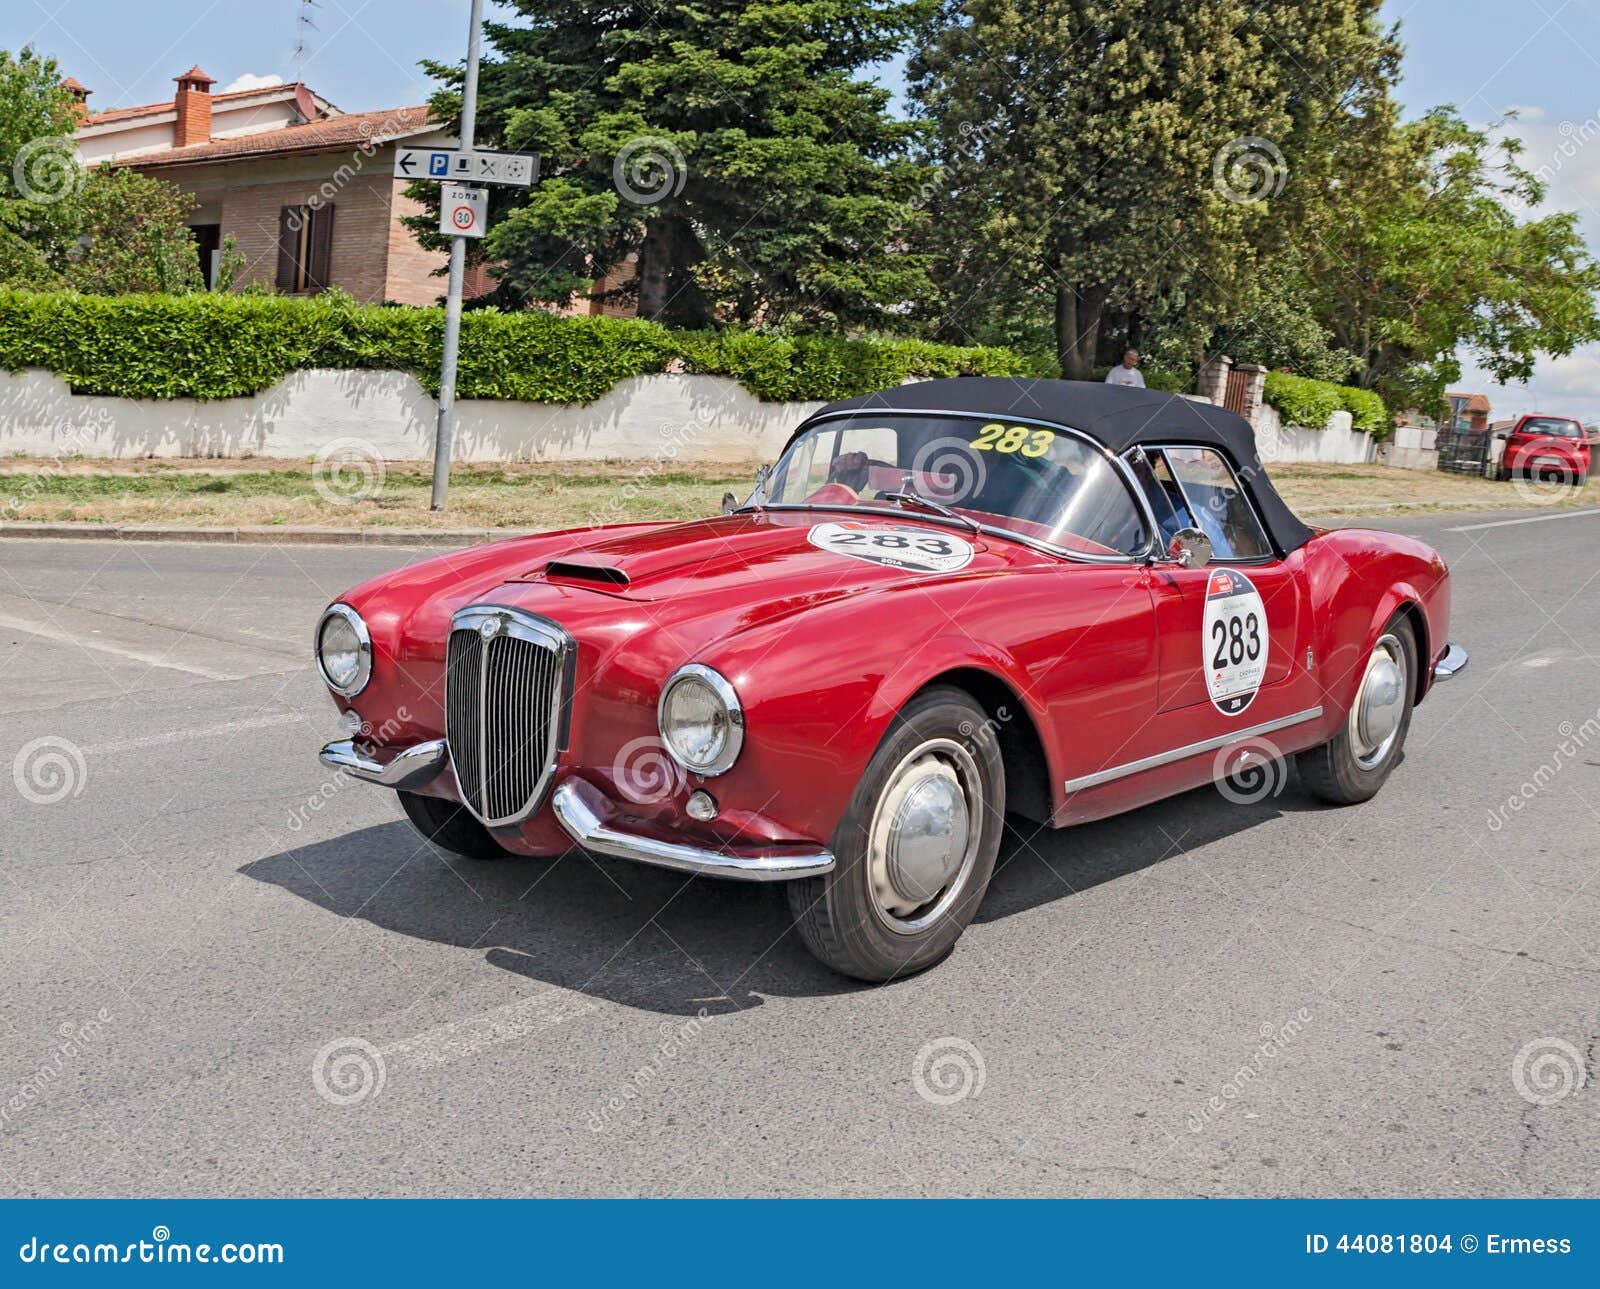 The crew R. Terlizzi D. Catasso on a vintage sports car Lancia Aurelia 